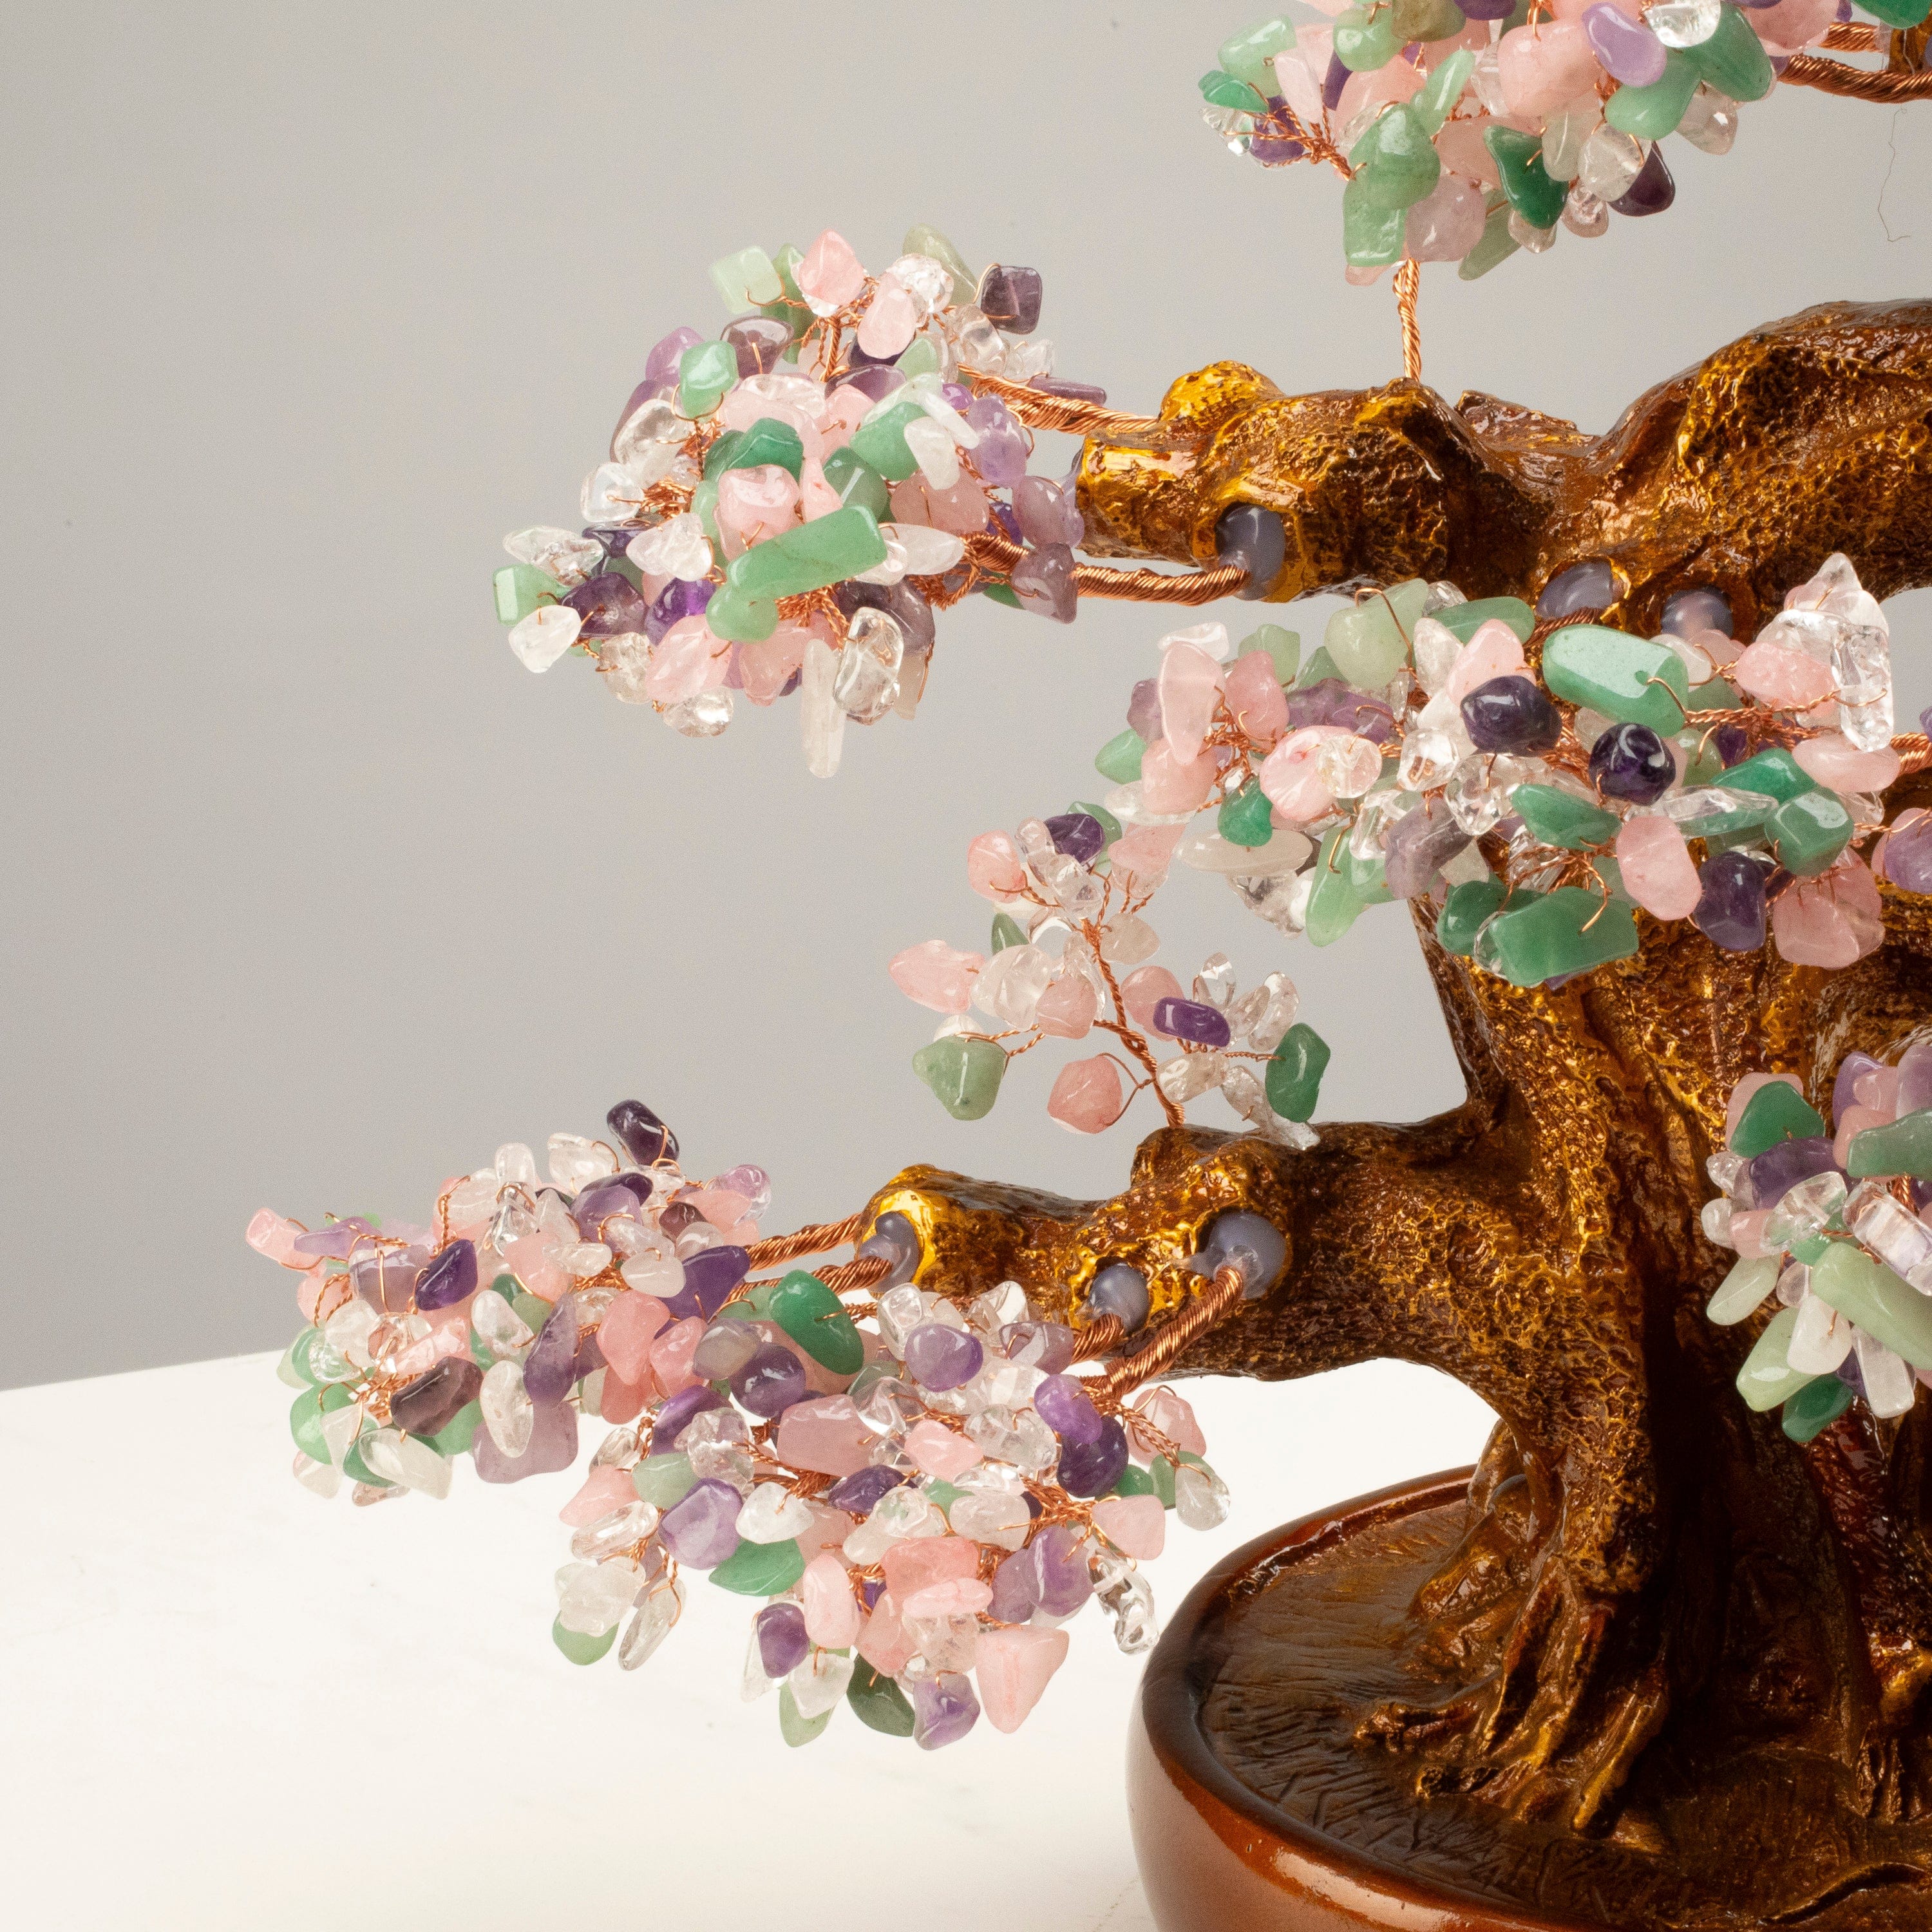 Kalifano Gemstone Trees Multi-Gemstone Bonsai Tree of Life with 1,251 Natural Gemstones K9150N-MT2